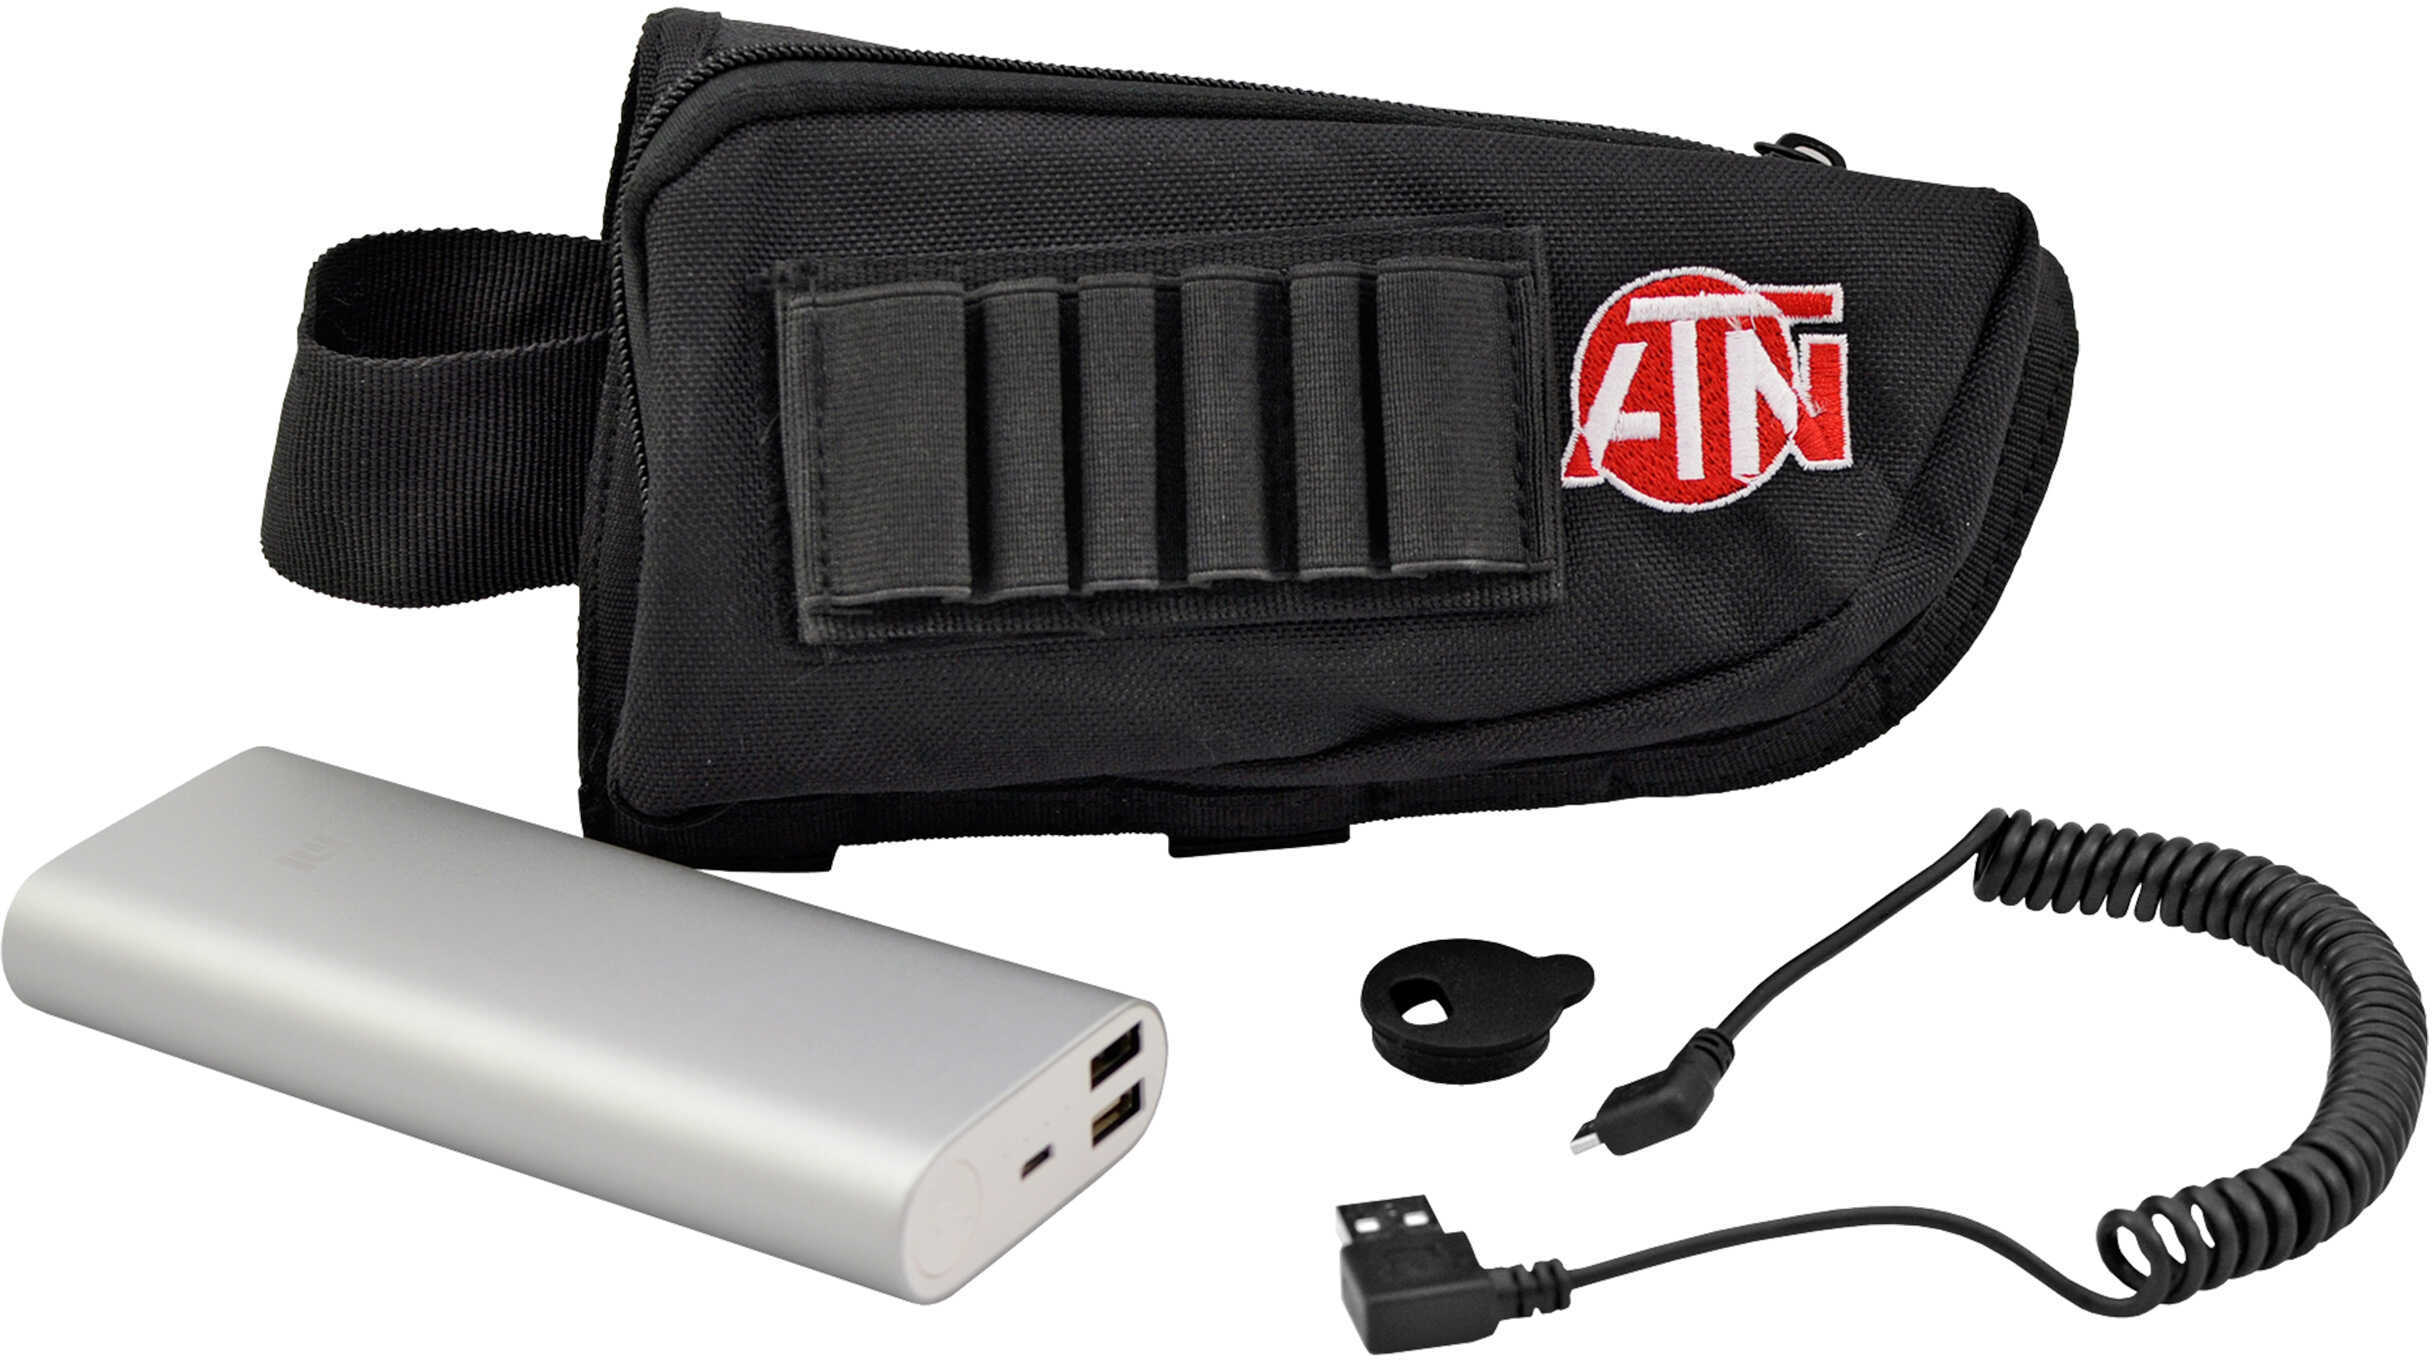 ATN Power Weapon Kit